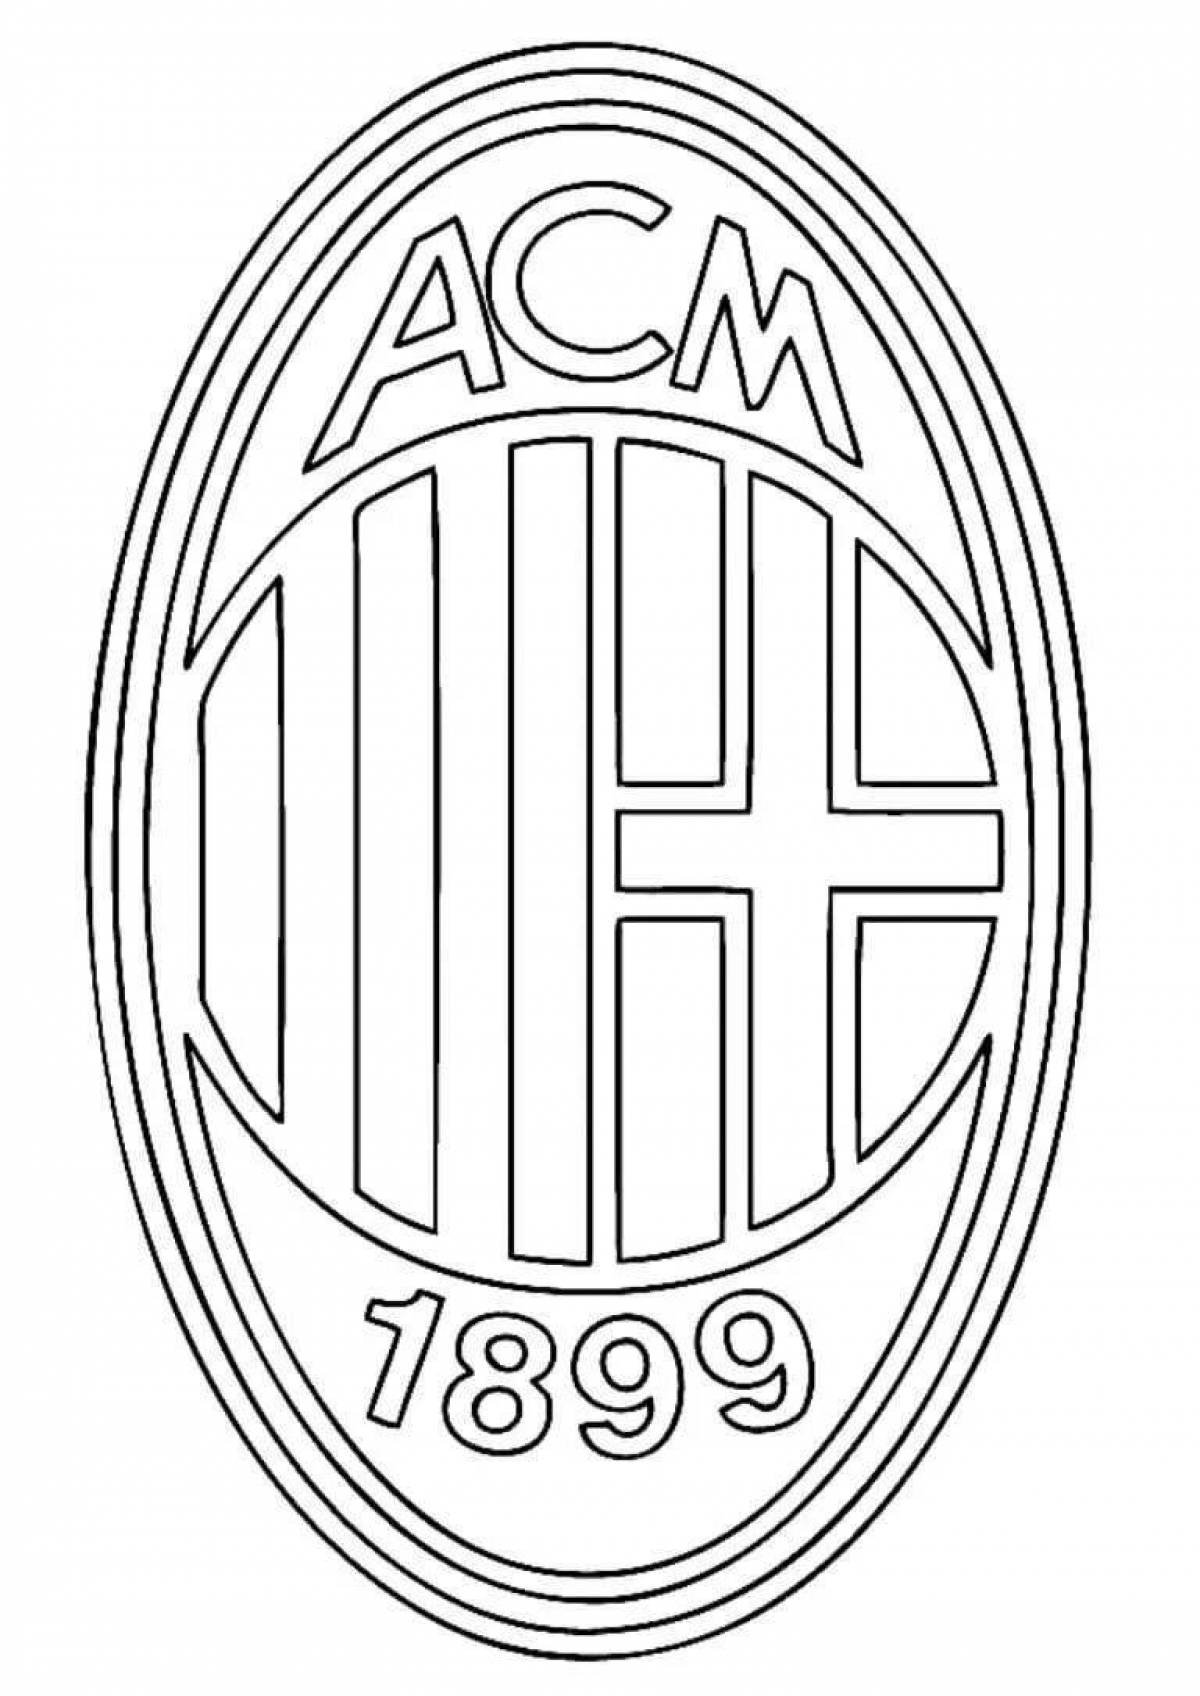 Football club emblems #10